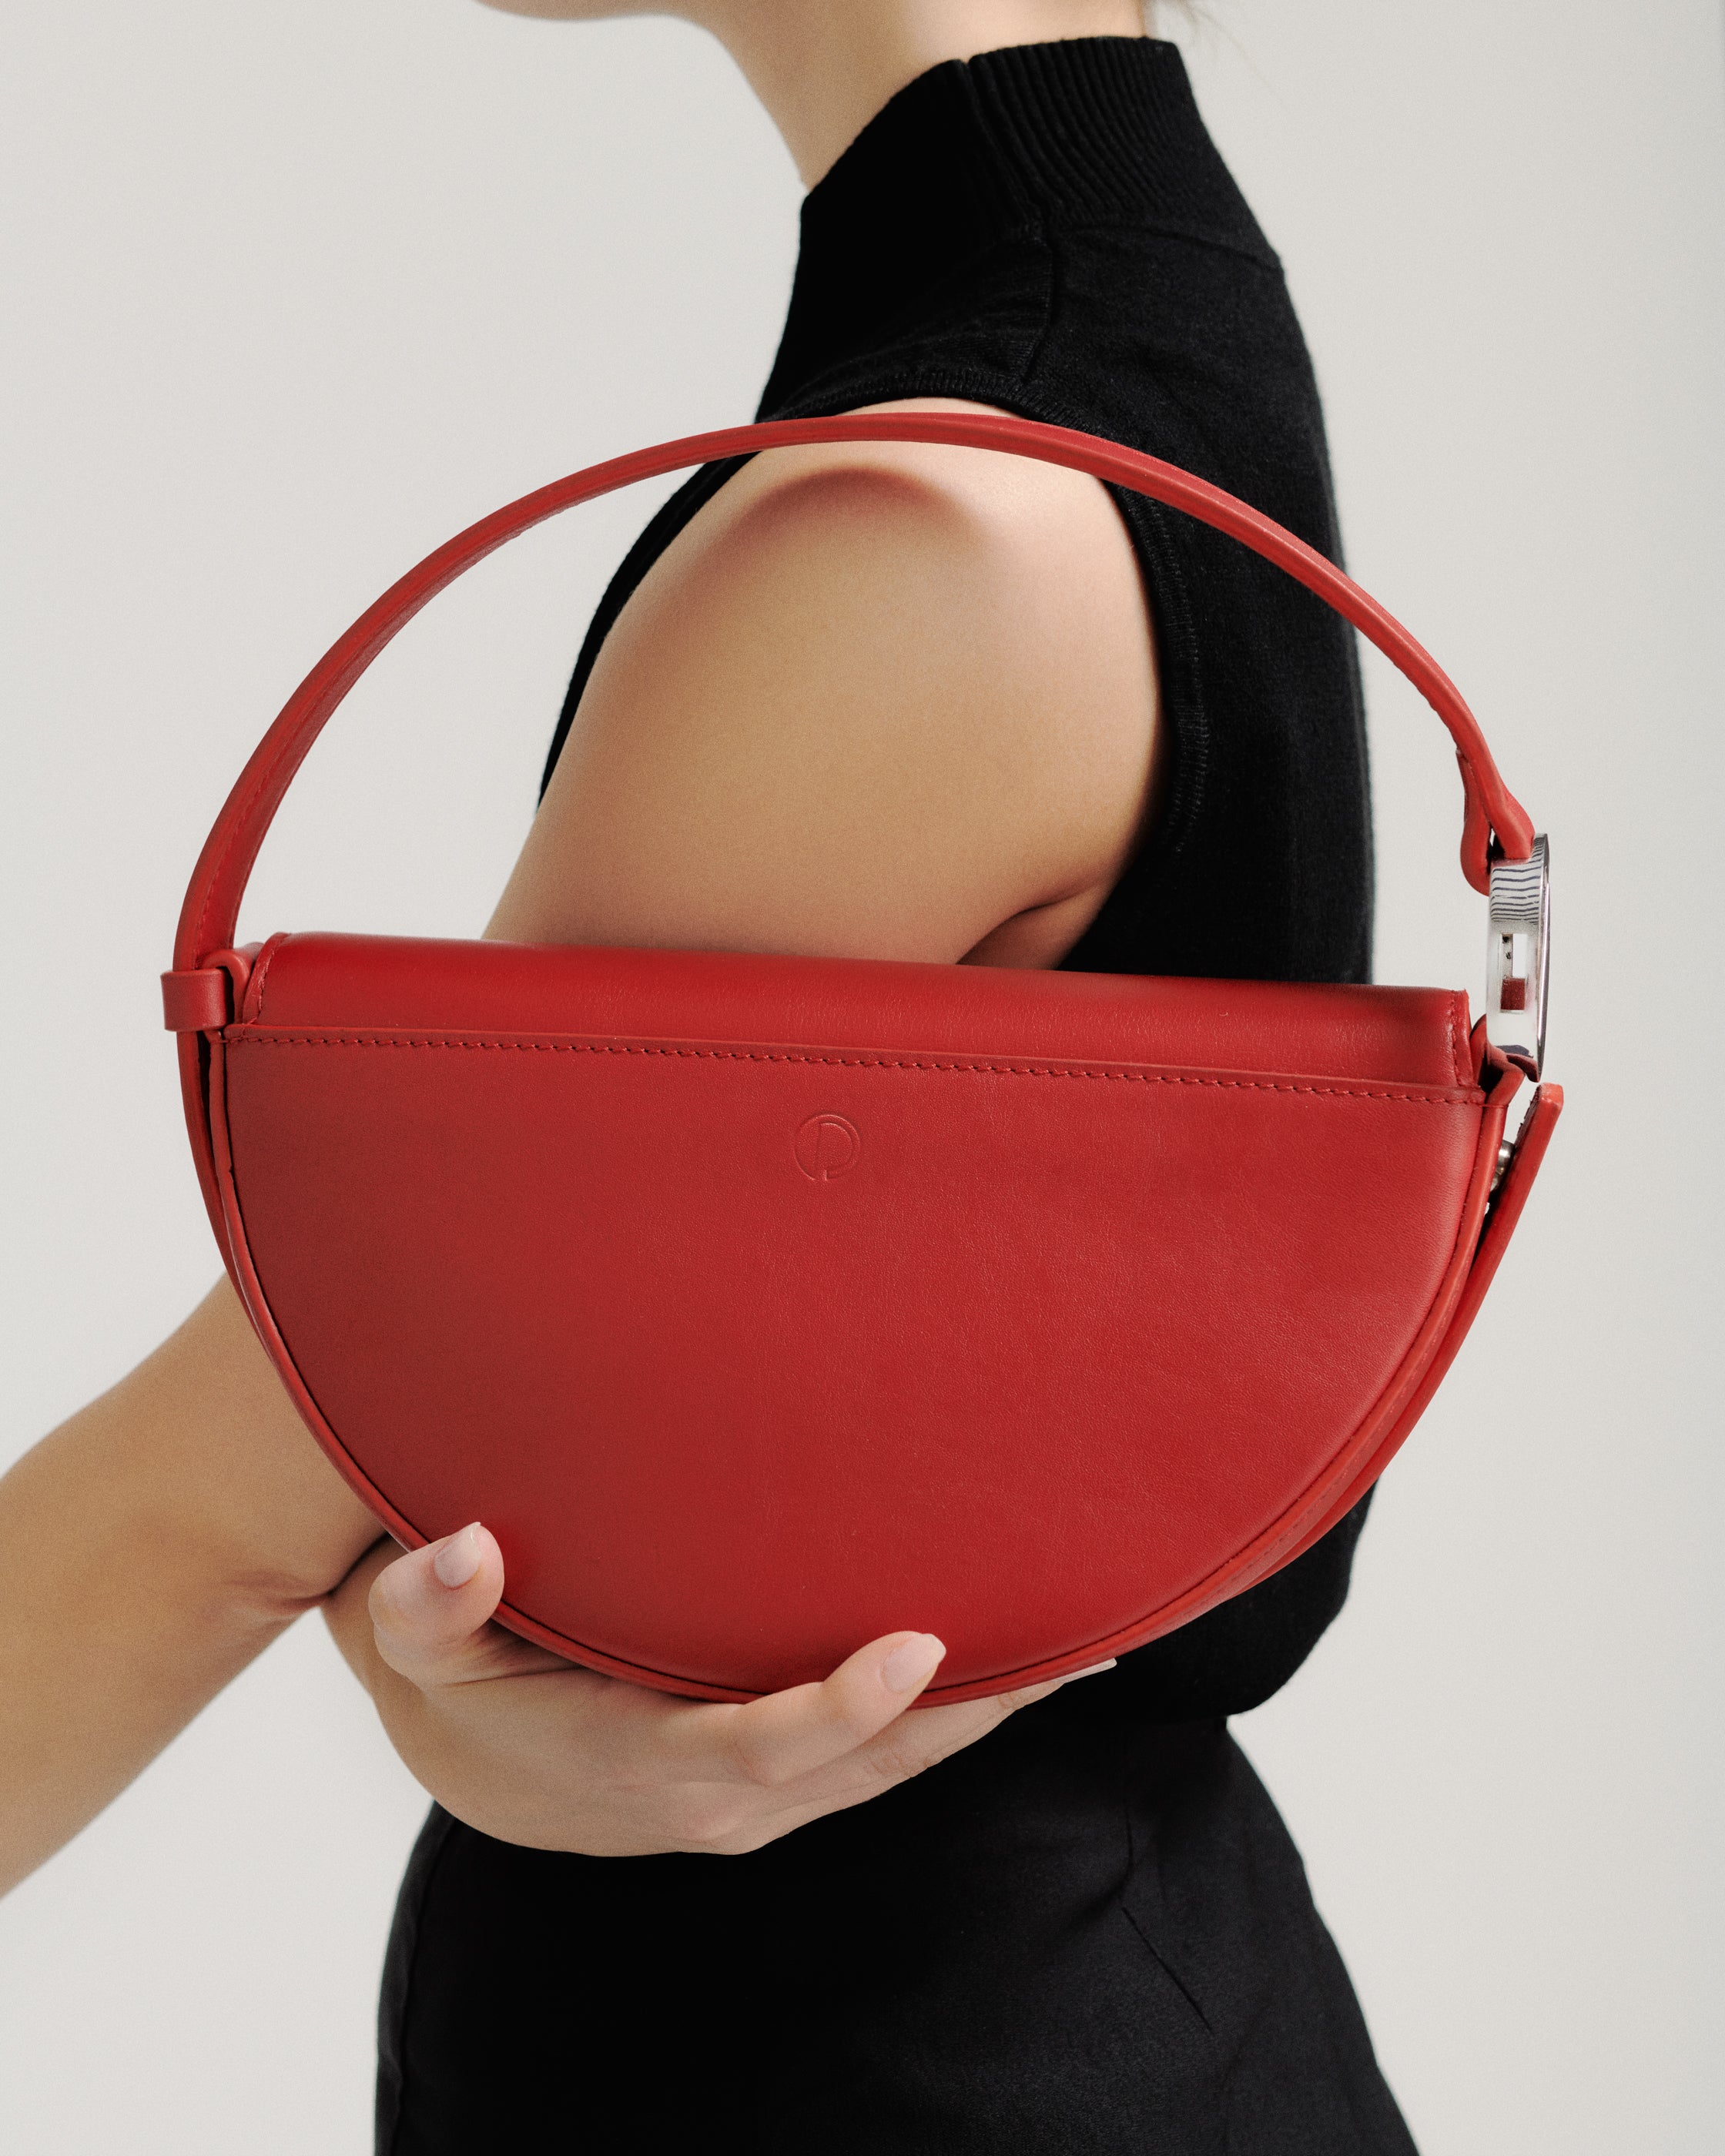 Dooz Celeste Bag in red with back pocket and embossed logo 